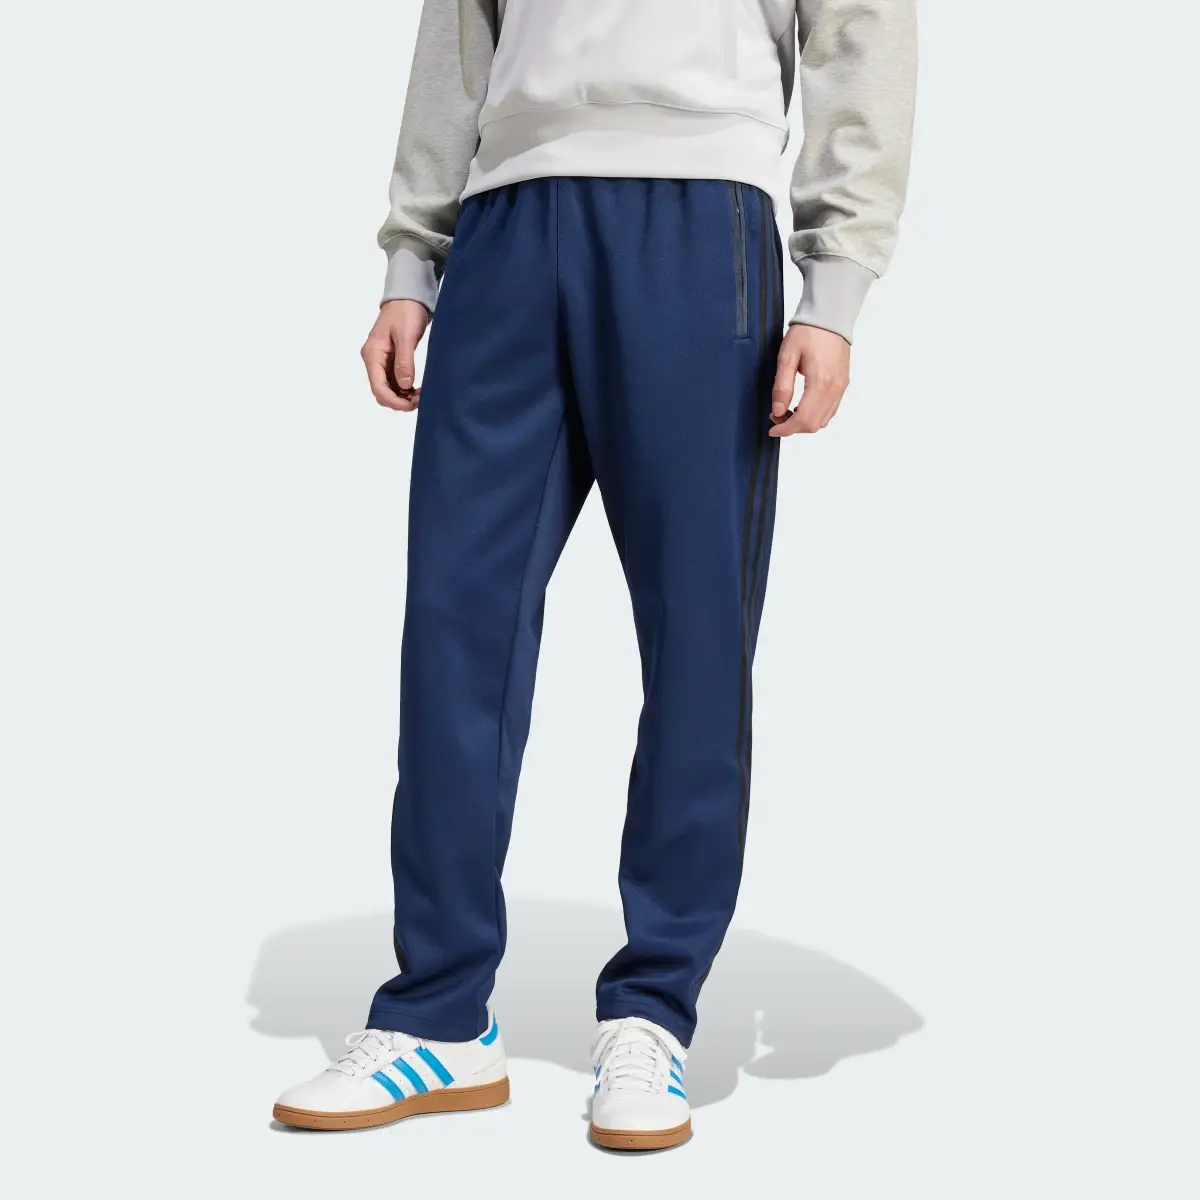 Adidas Premium Track Pants. 1